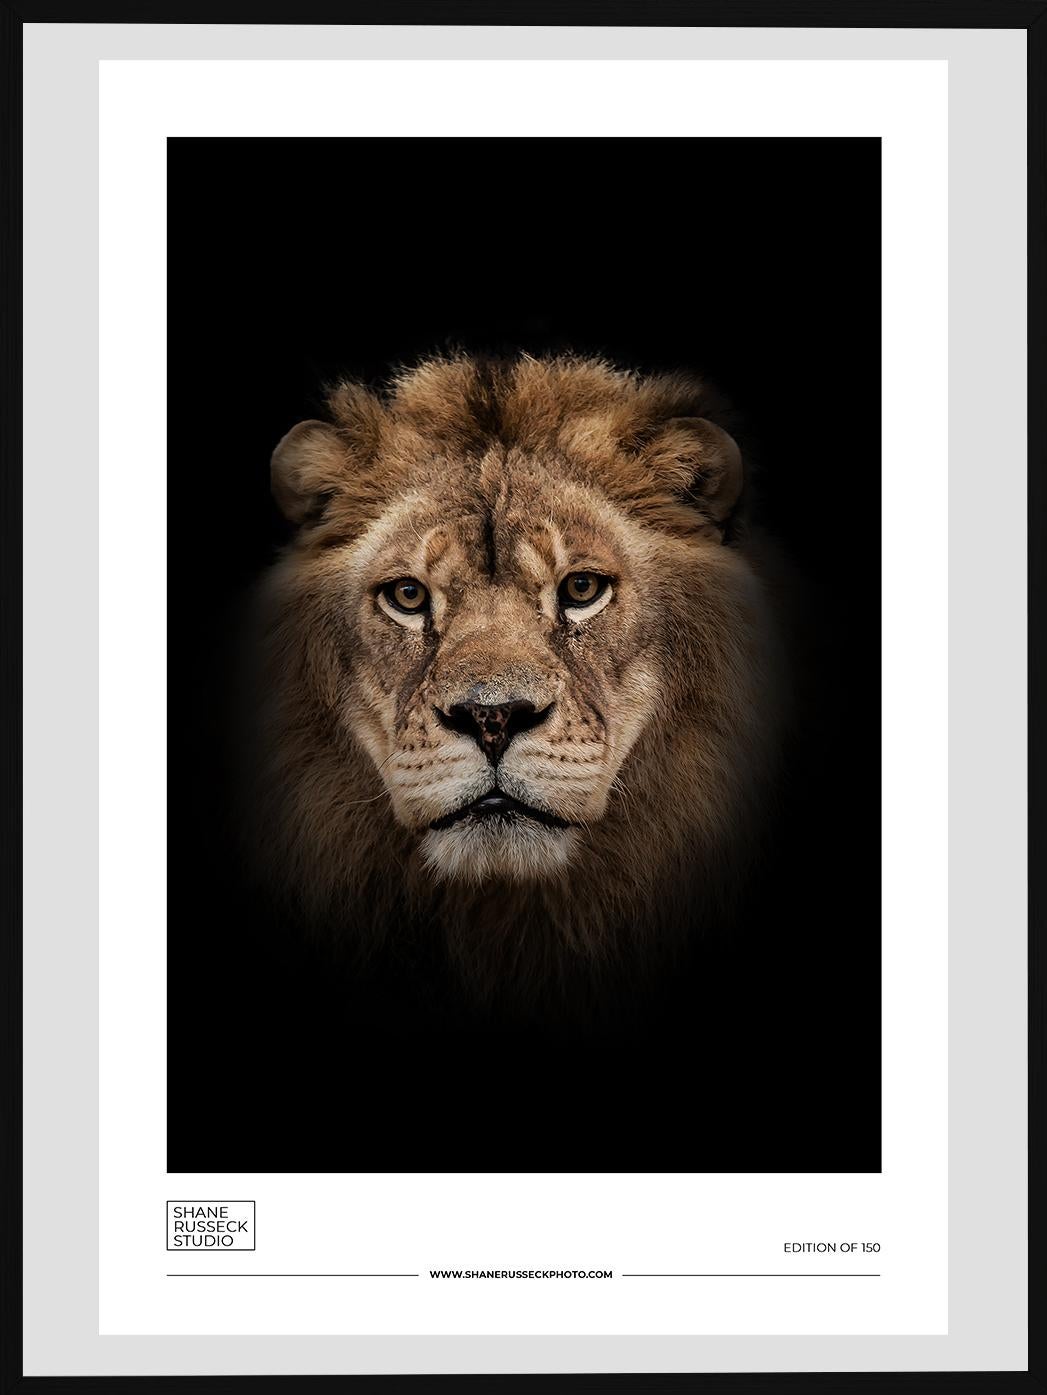 Shane Russeck Animal Print - 24x36 Lion Photograph Photography Print Poster 